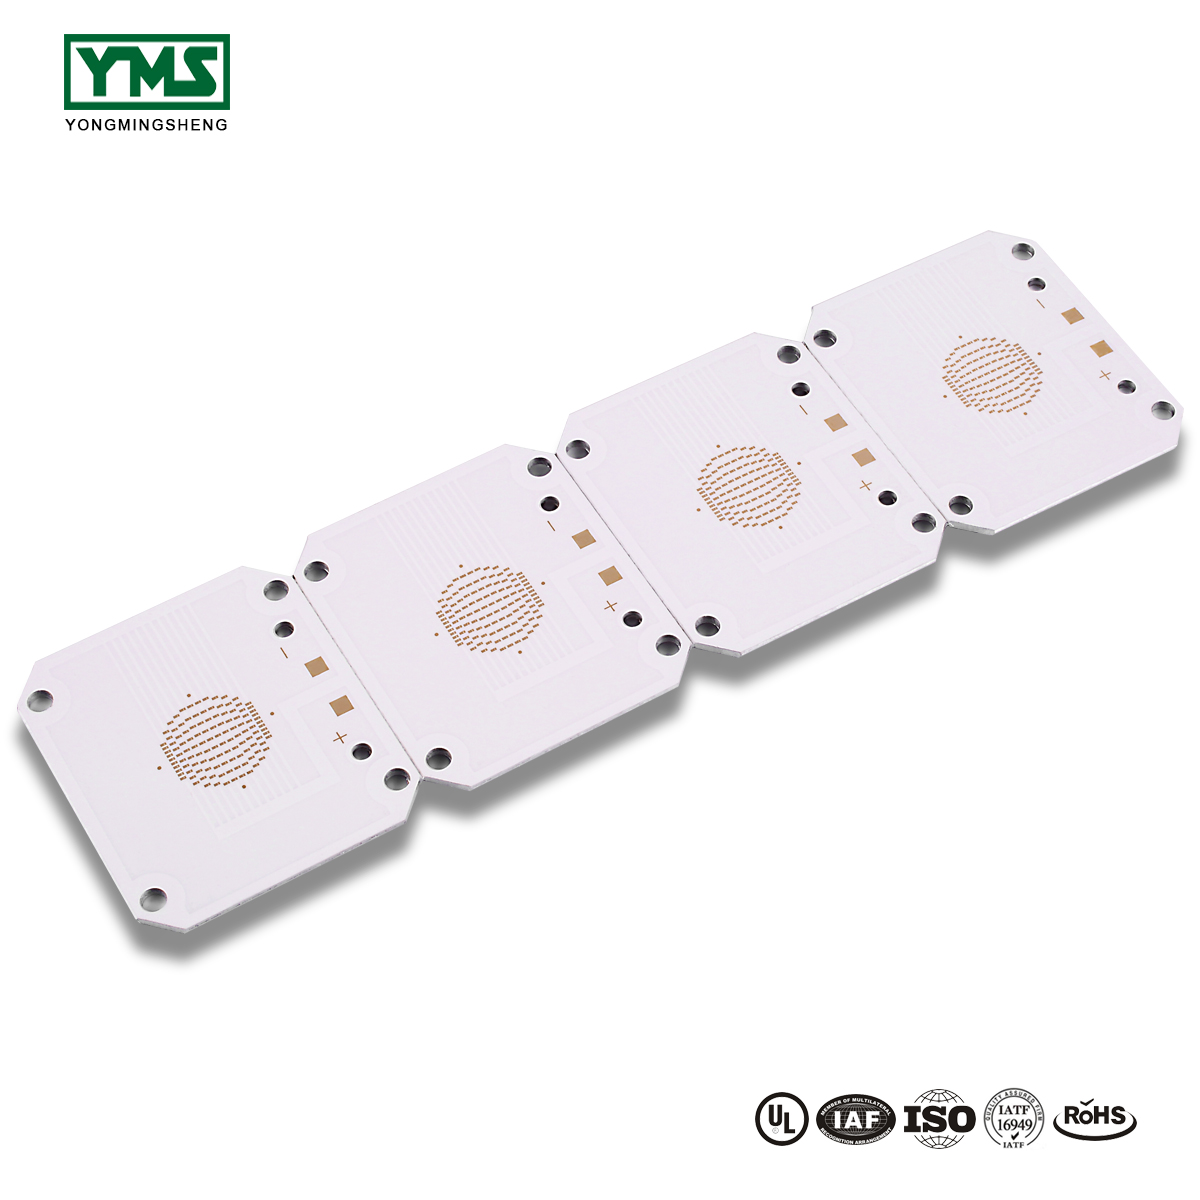 Discount wholesale Bare Pcb Fr4 Material - 1Layer Aluminum base Board | YMSPCB – Yongmingsheng